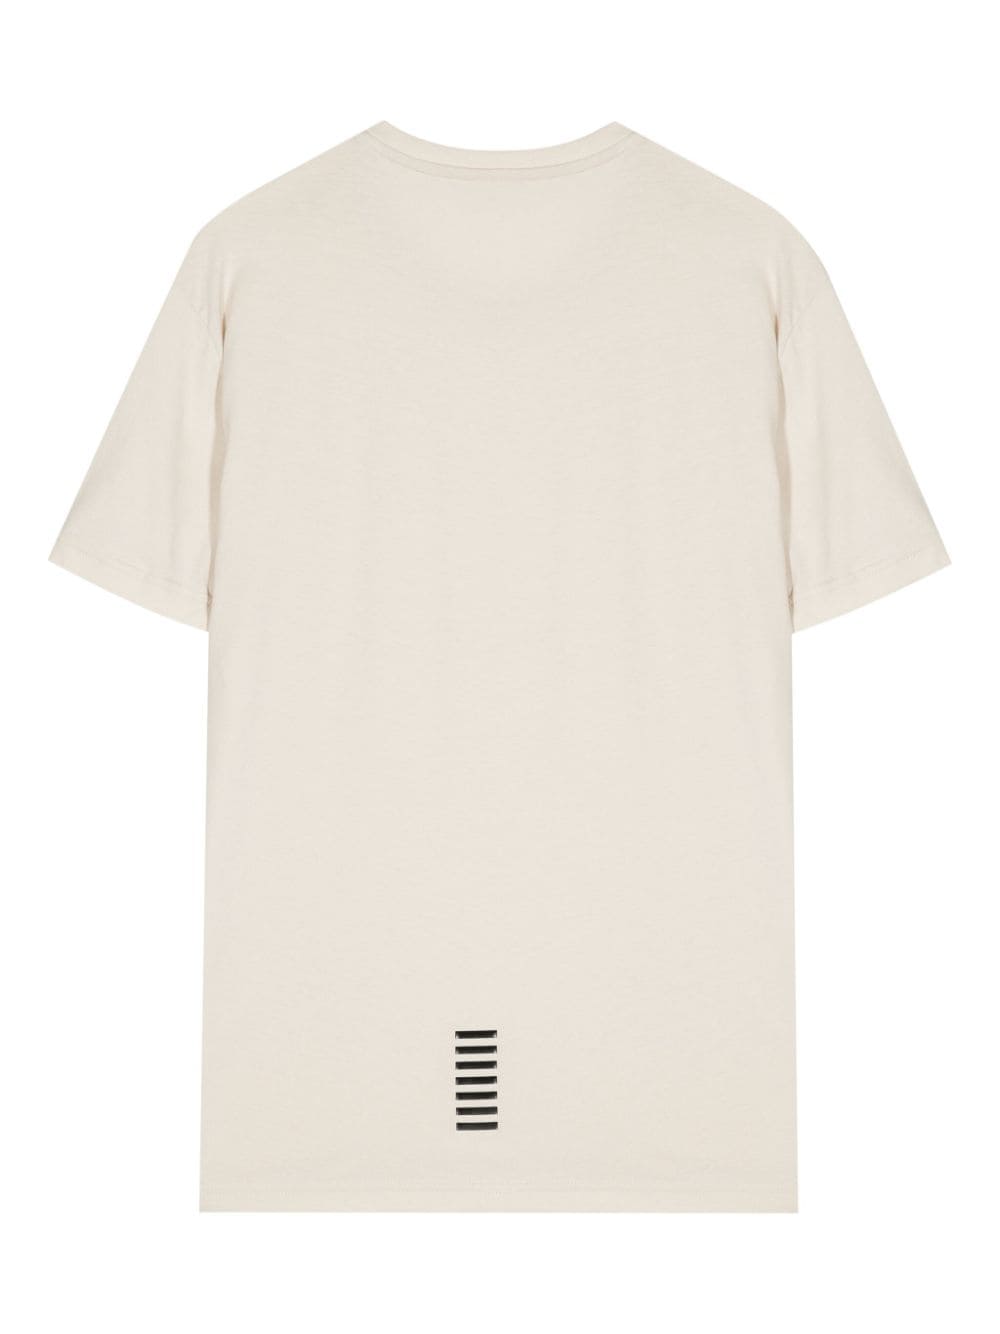 Ea7 Emporio Armani logo-print cotton T-shirt - Beige